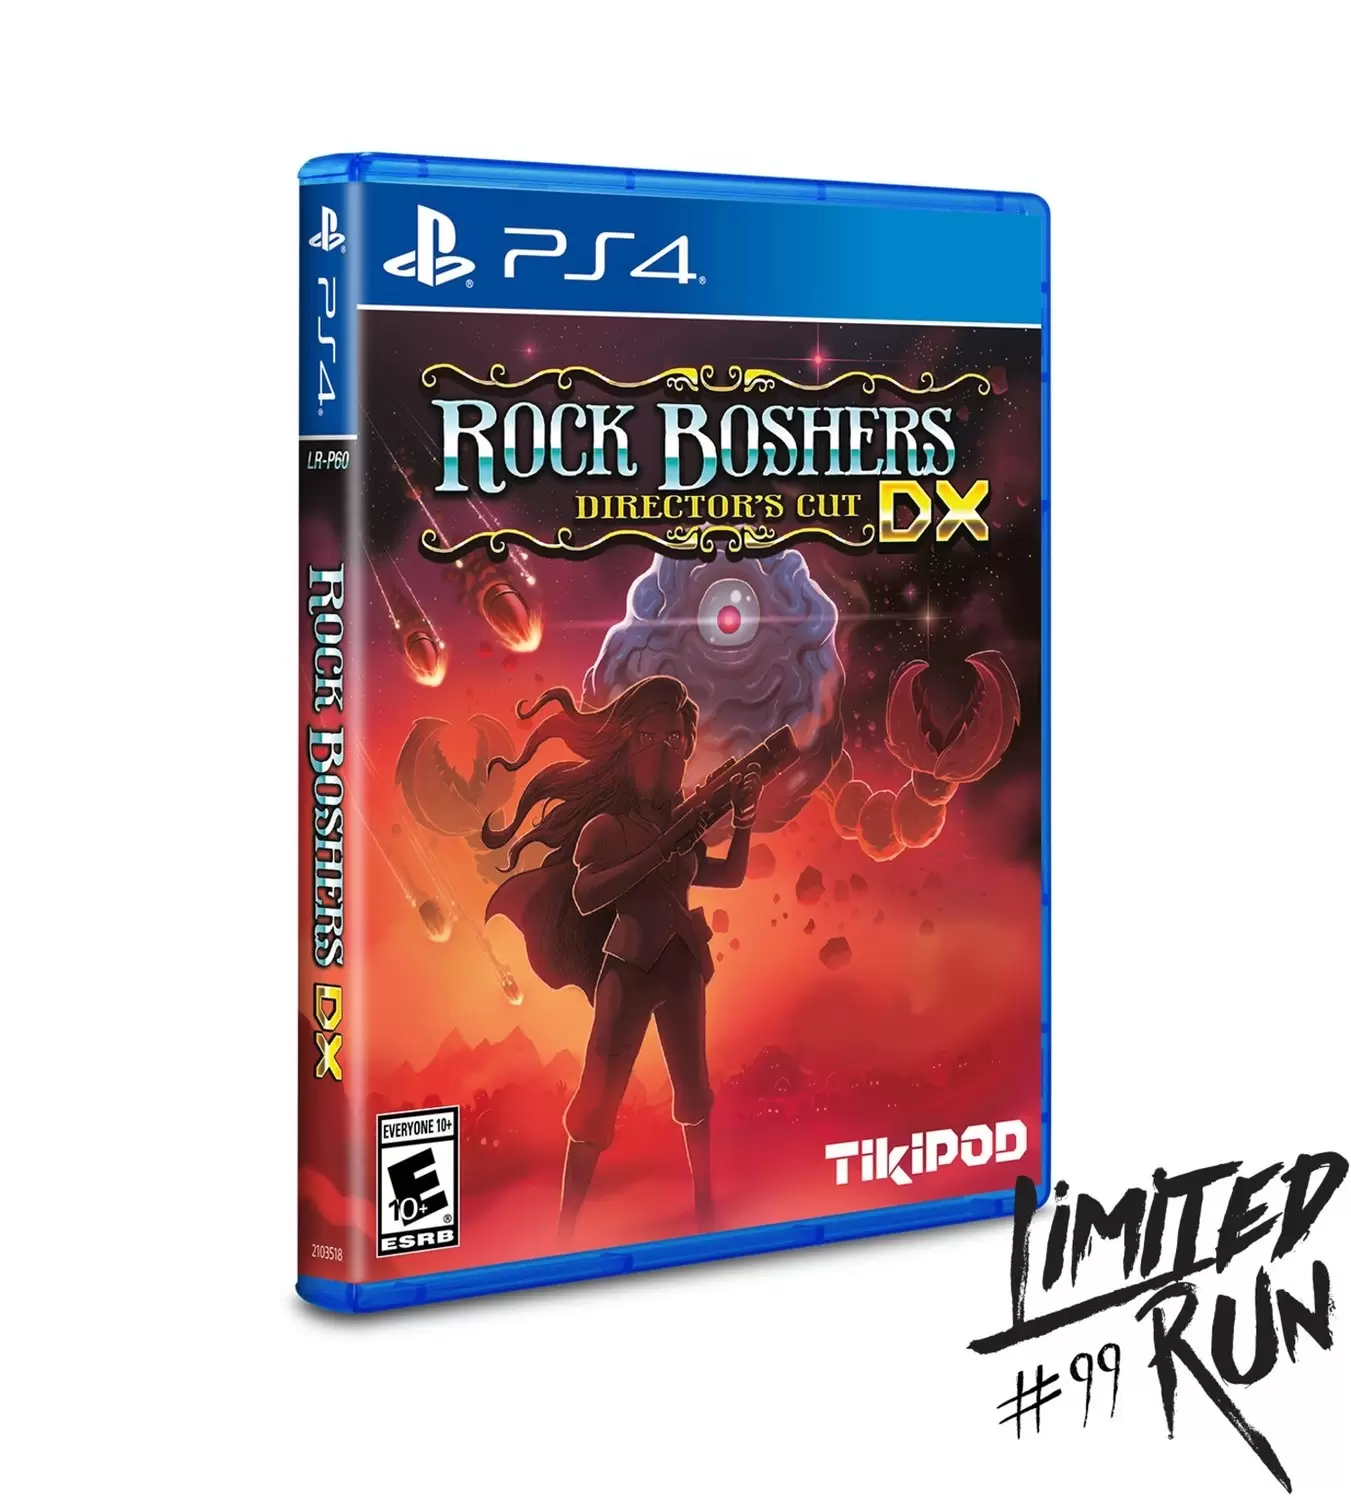 PS4 Games - Rock Boshers DX